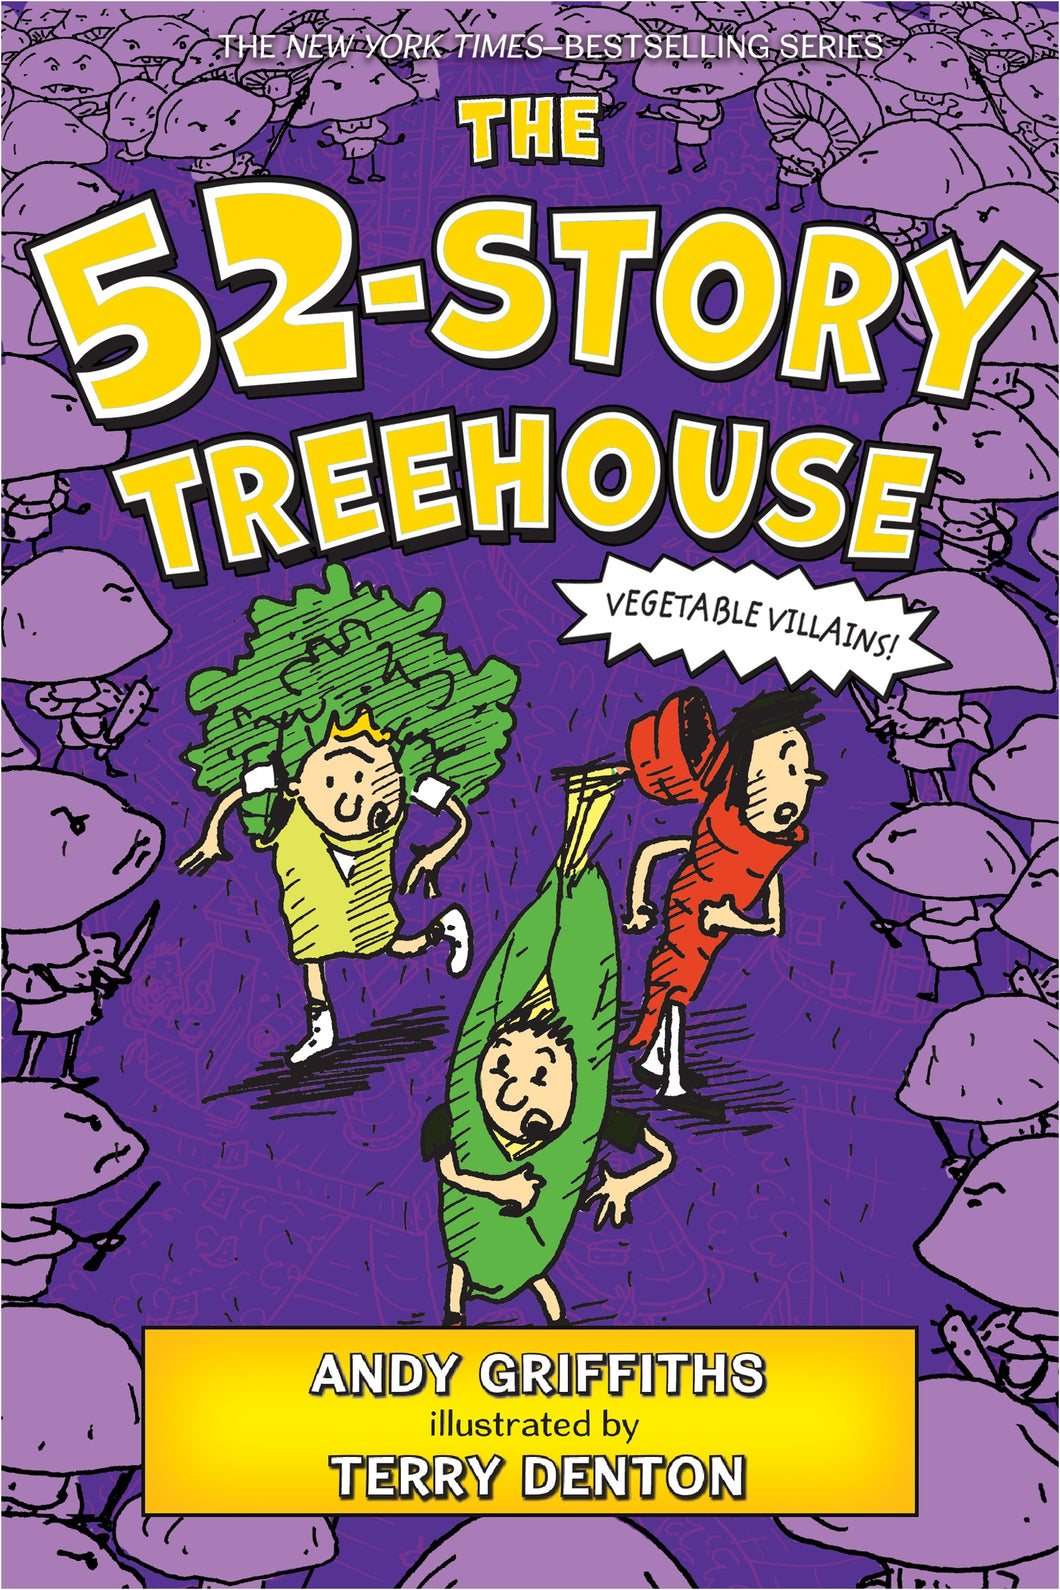 The 52-Story Treehouse: Vegetable Villains!